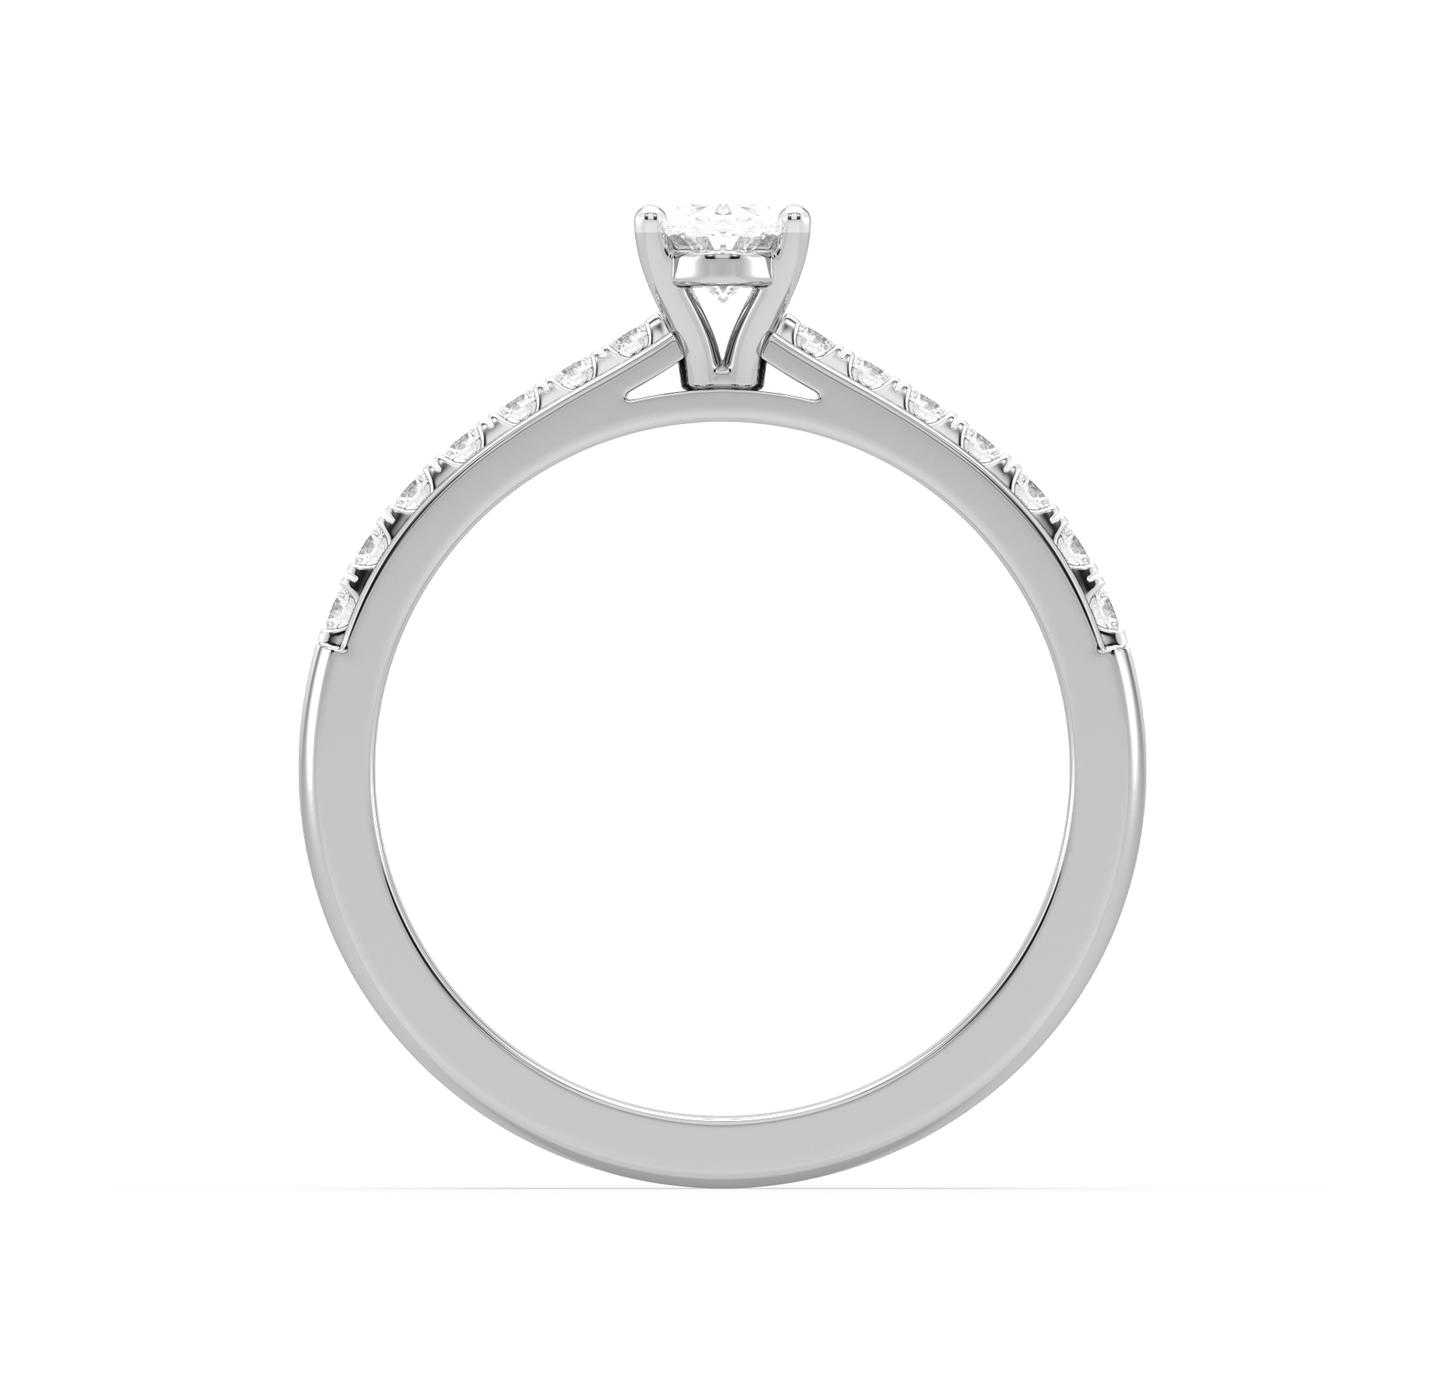 Customised ring RG21007-PH21020